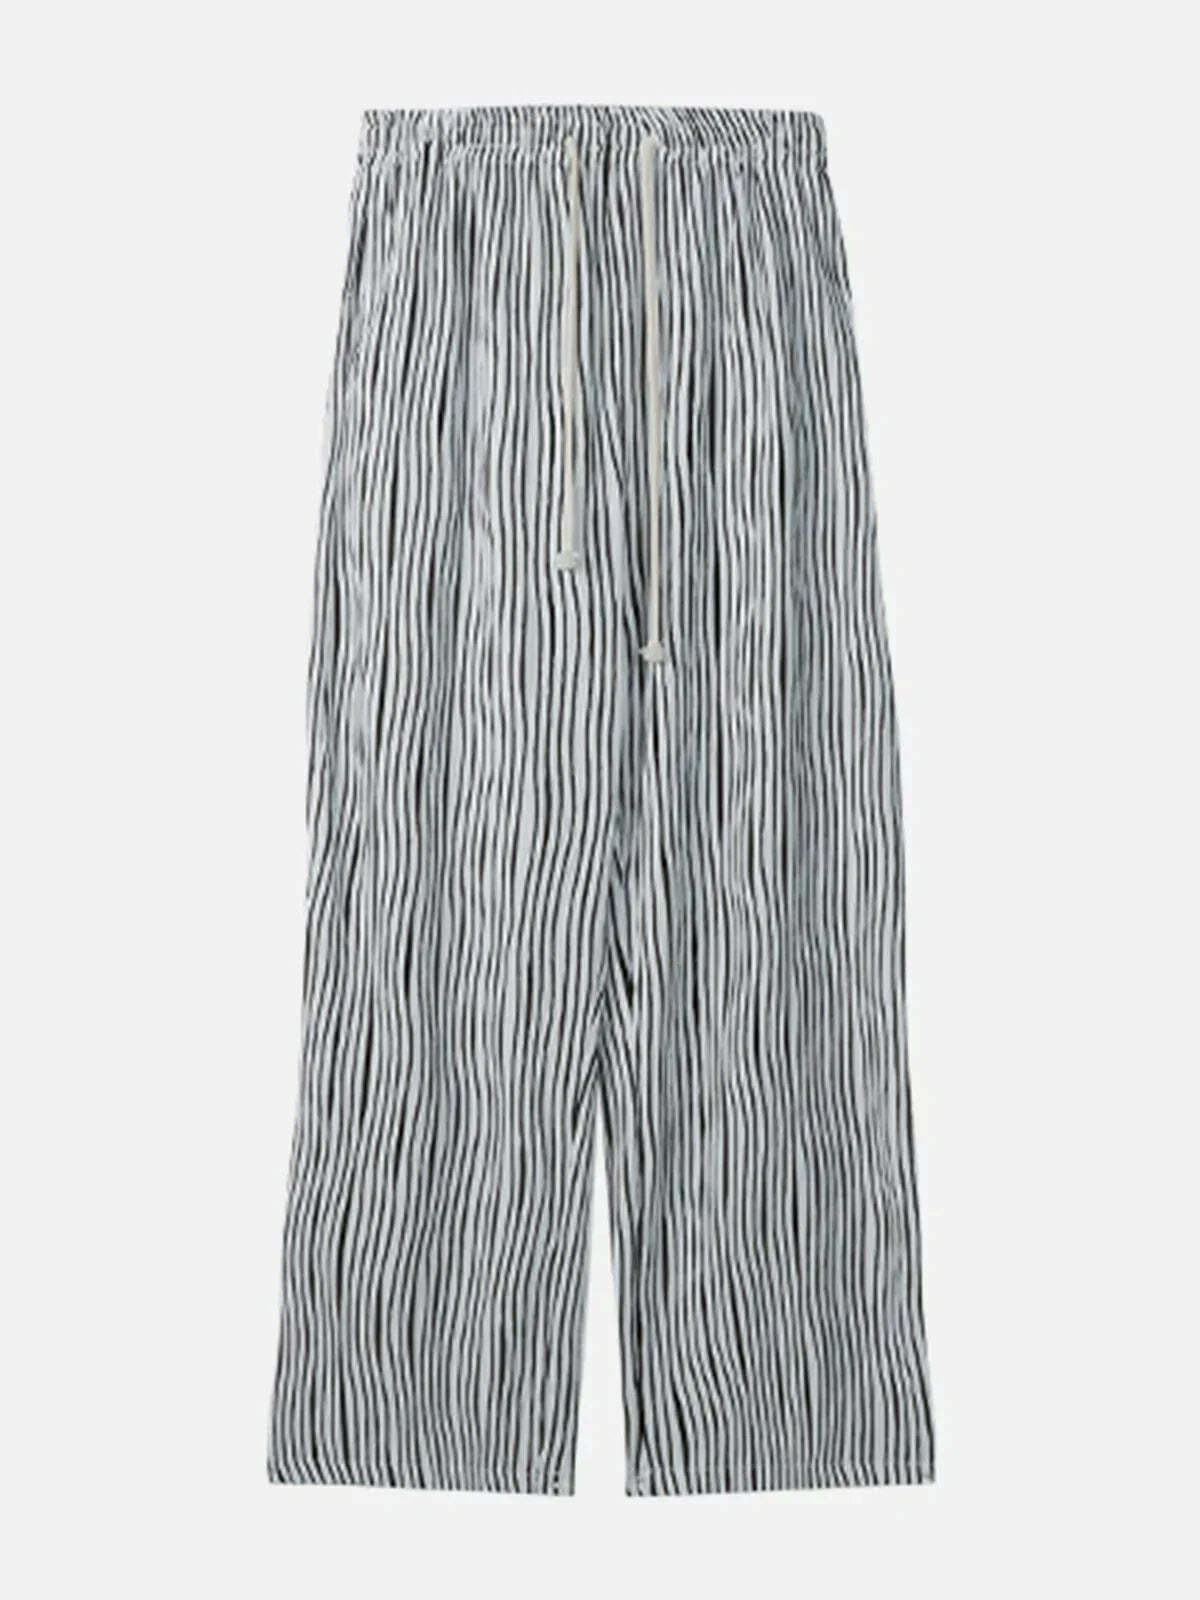 zebra pattern pants edgy animal print street style 4365